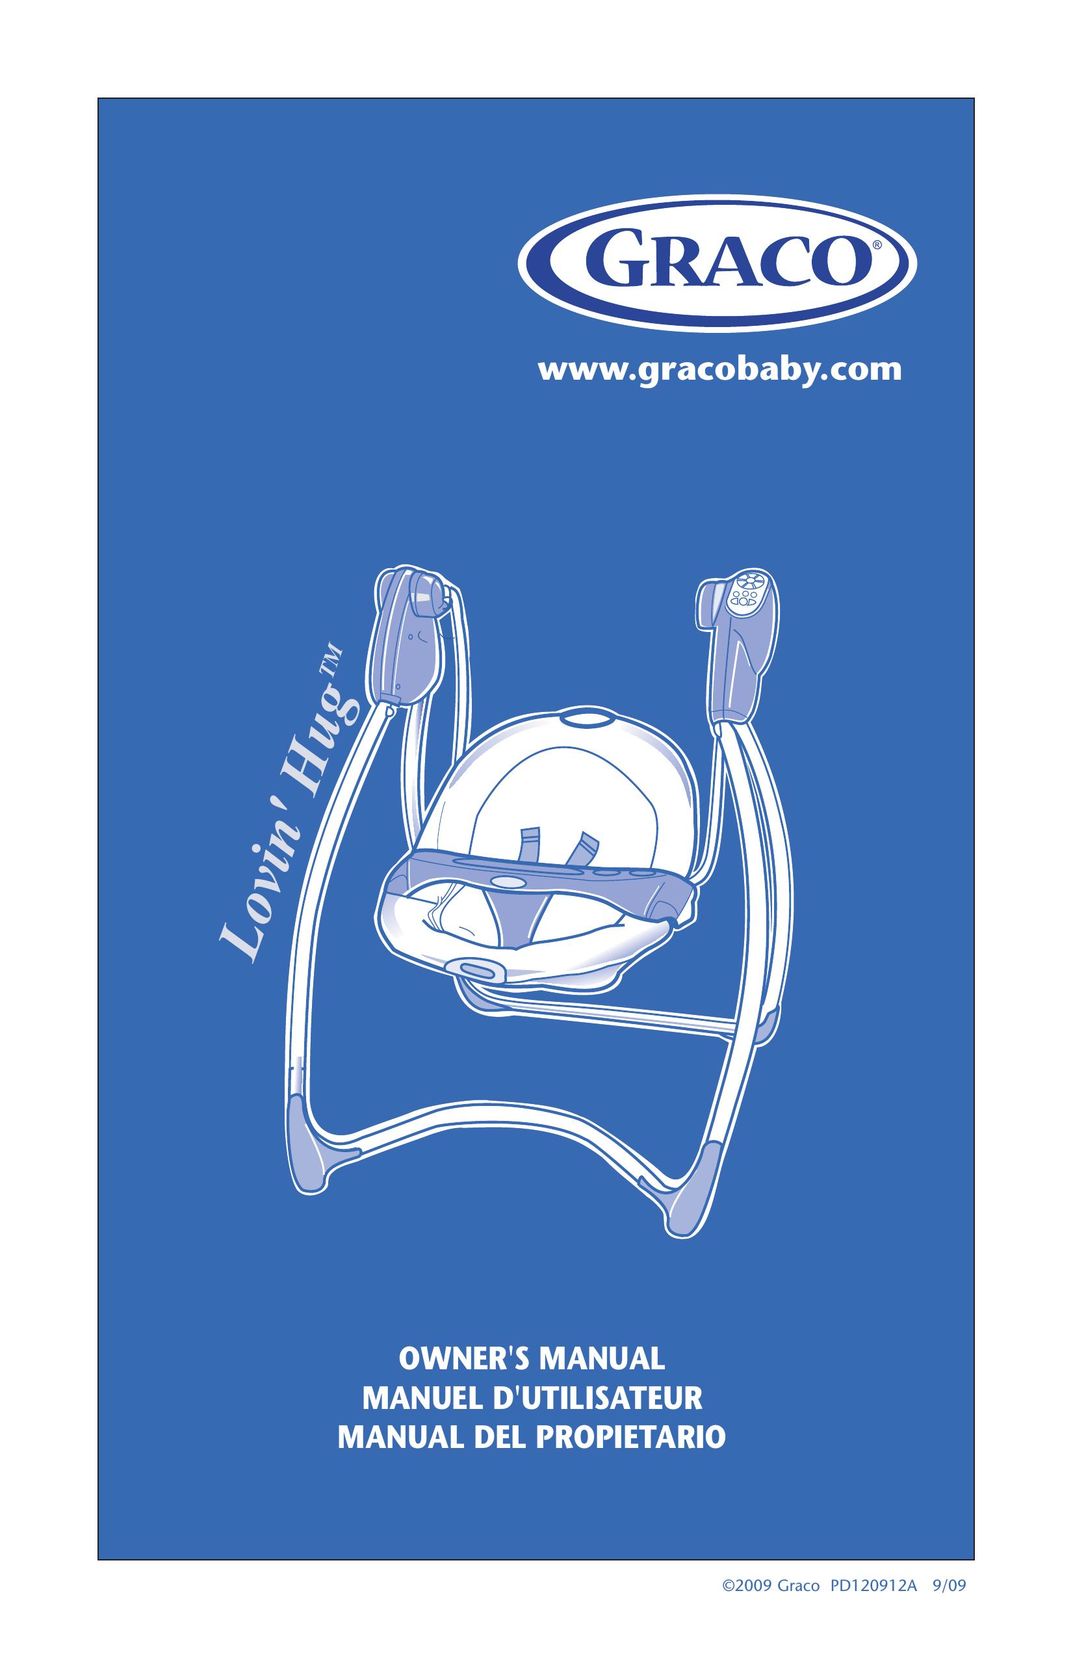 Graco 1761642 Baby Swing User Manual